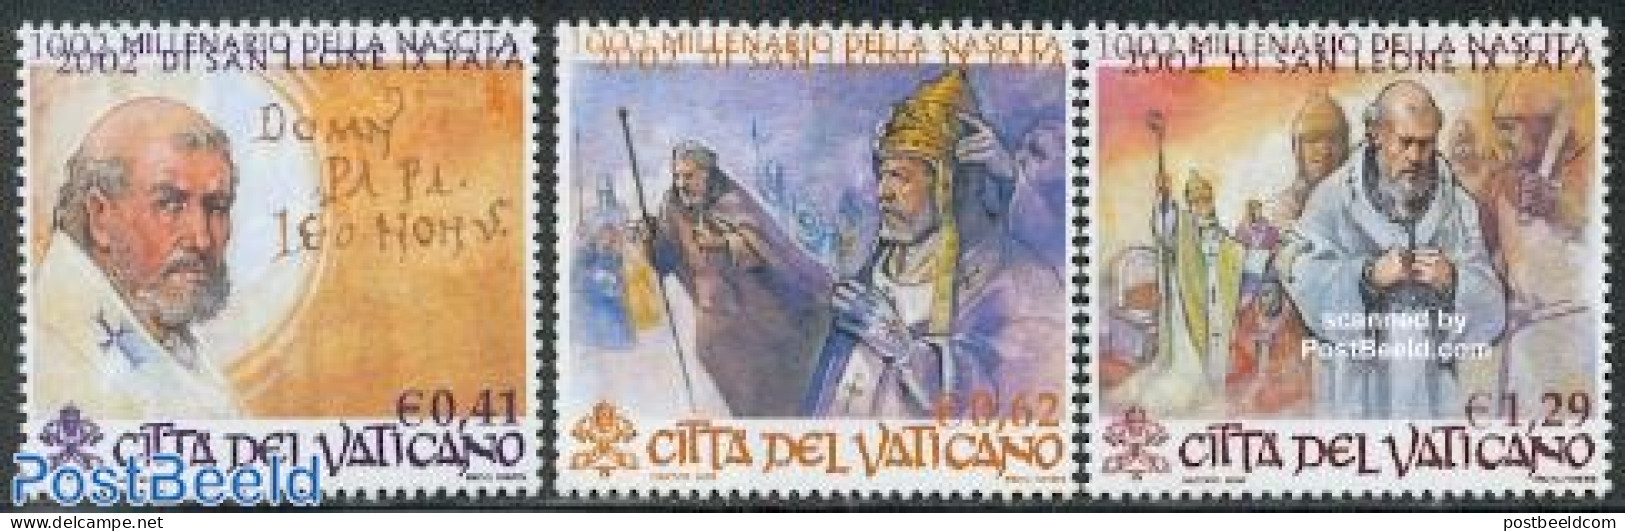 Vatican 2002 Pope S. Leone IX 3v (1v With Tab), Mint NH, Religion - Pope - Religion - Nuovi